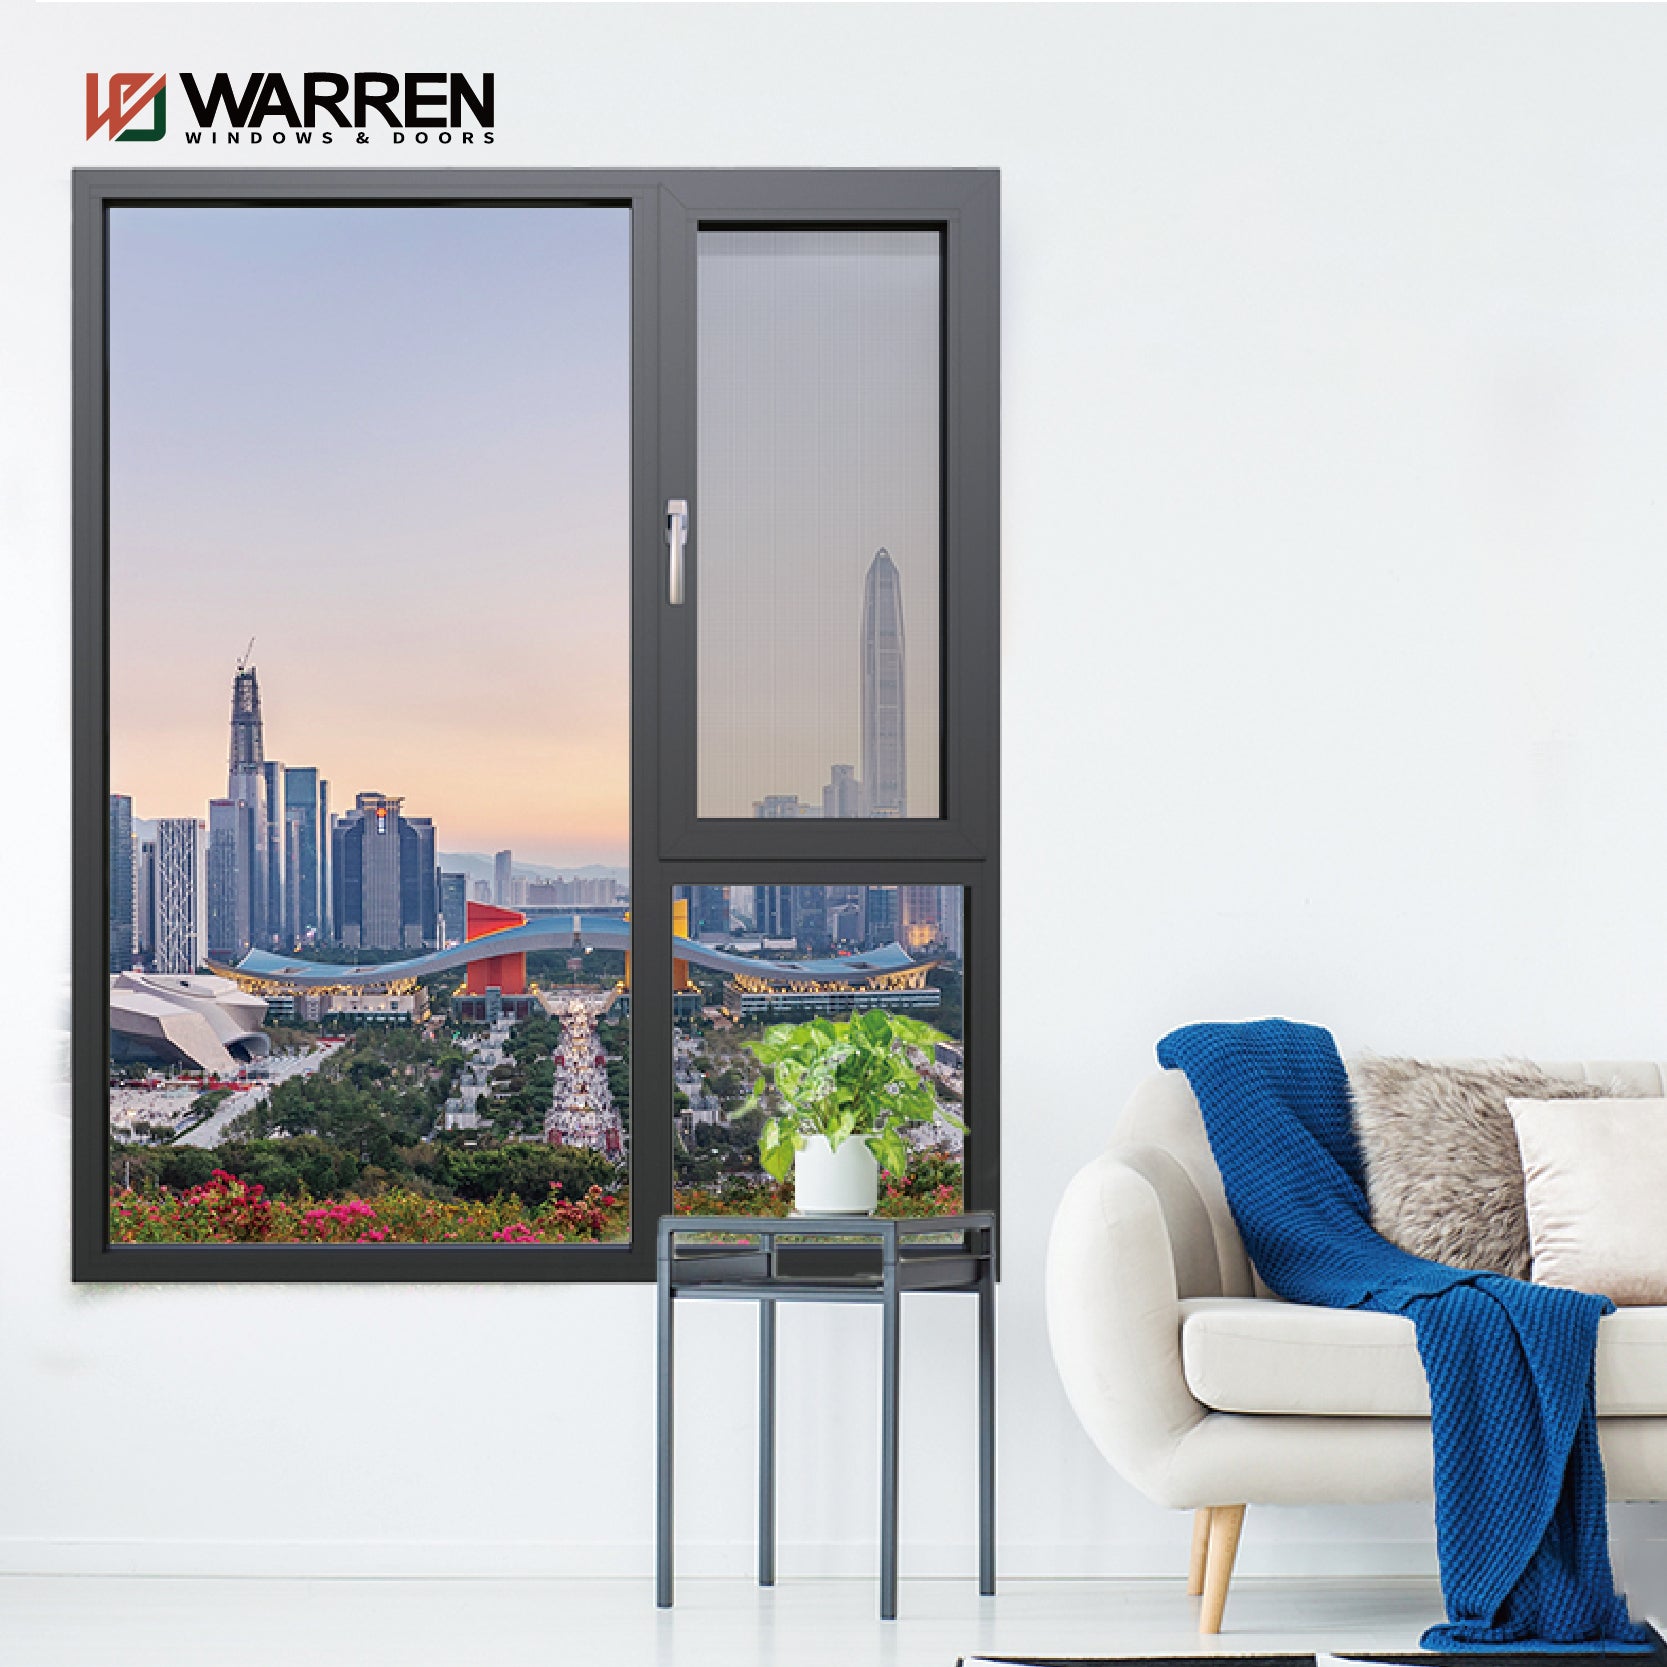 Warren New Hot Product All Houses Double Glass Aluminium Tilt Turn Windows Window With A Screen